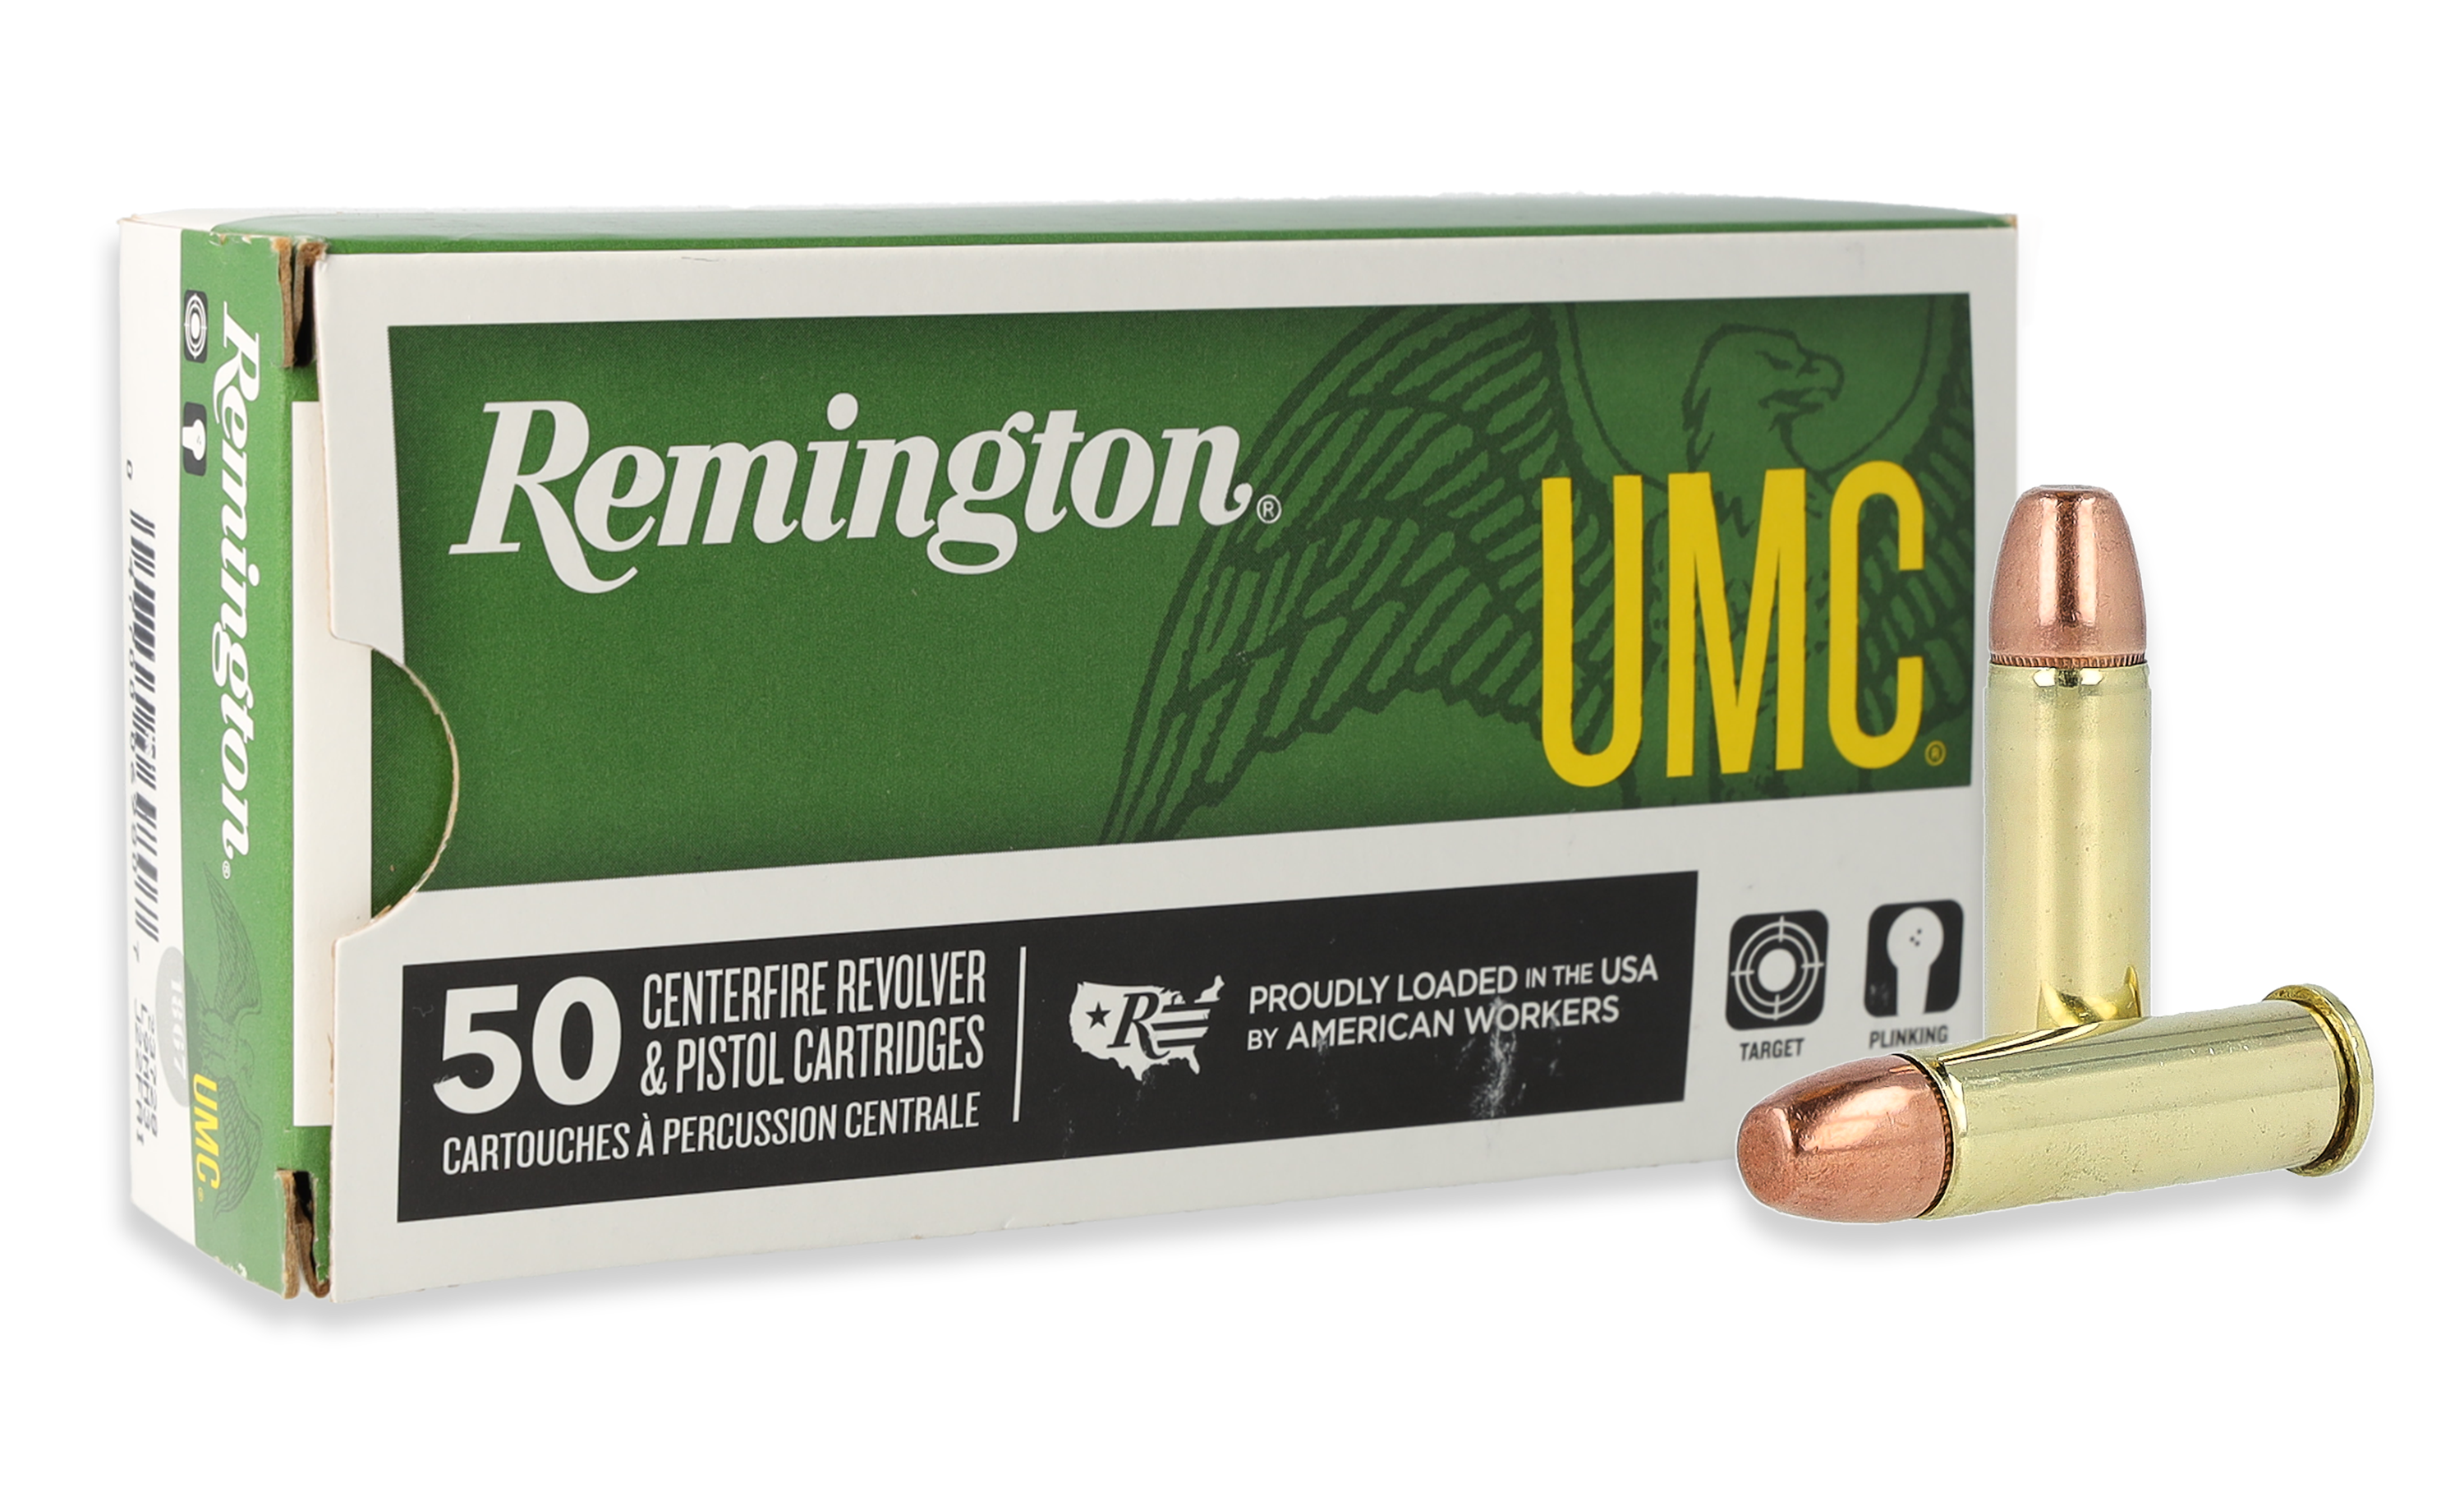 Remington UMC Handgun Ammo - .38 Super Auto +P - 130 Grain